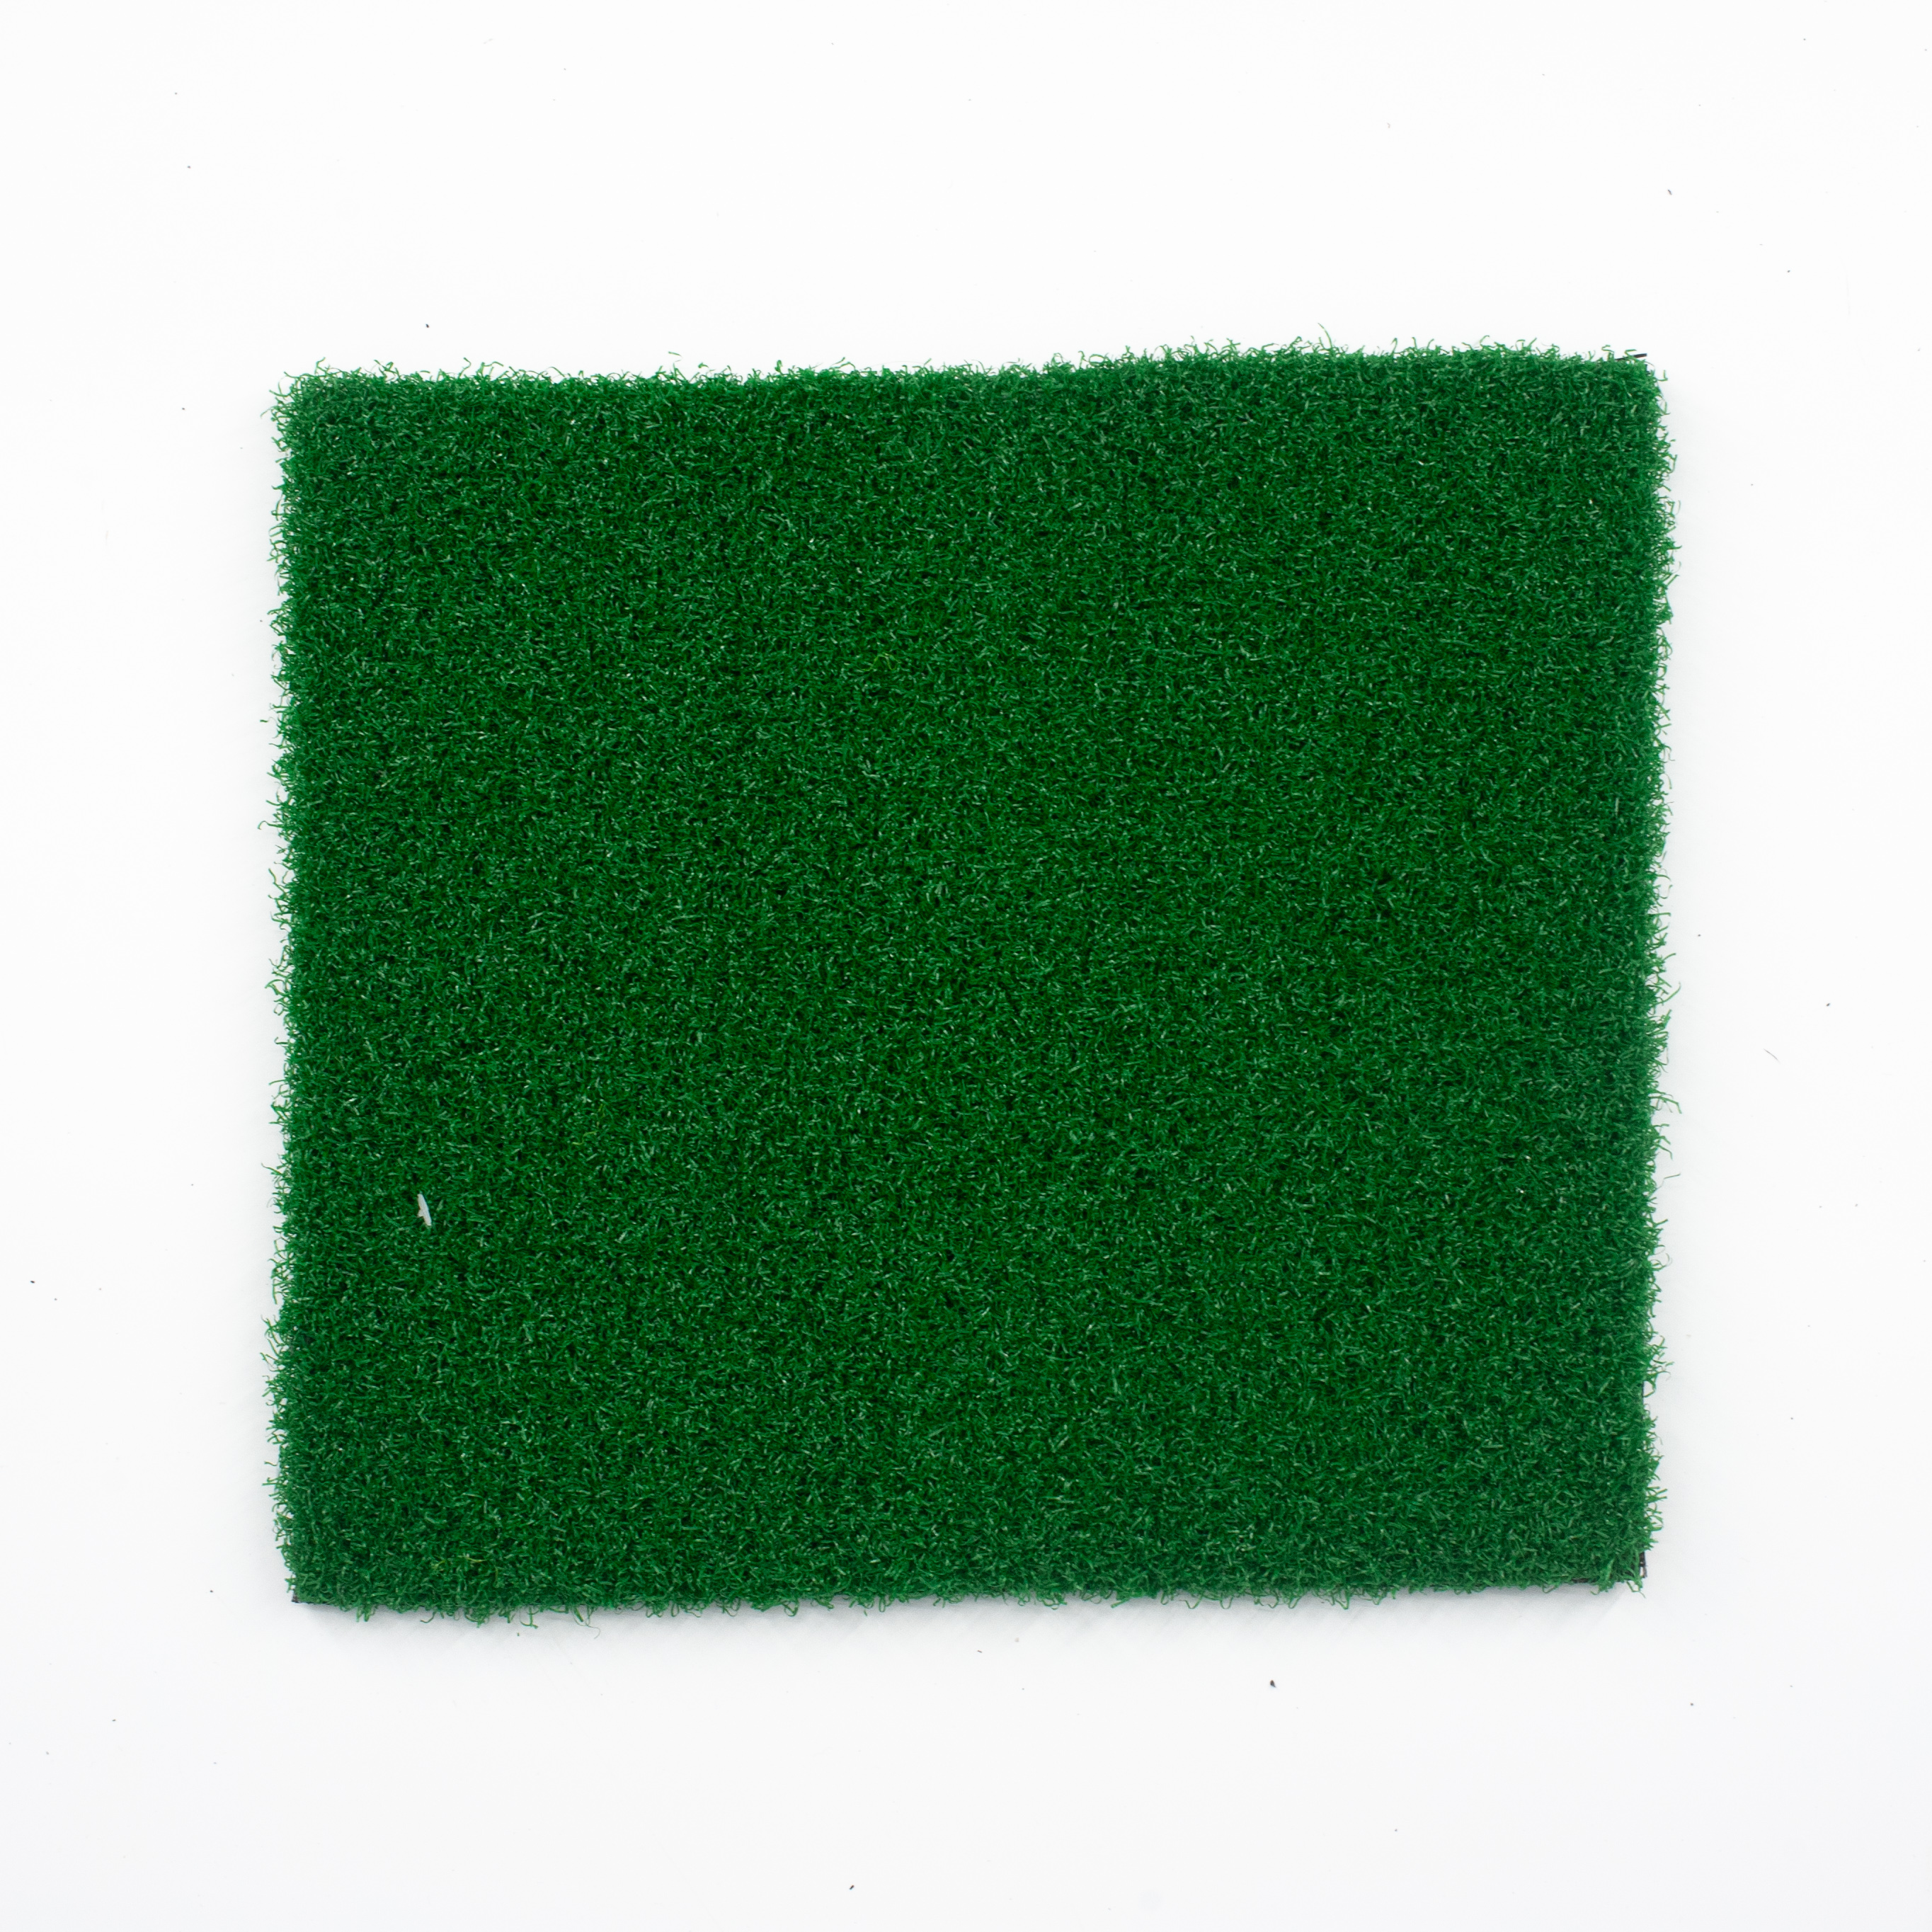 30mm Softest Artificial Grass for Tennis